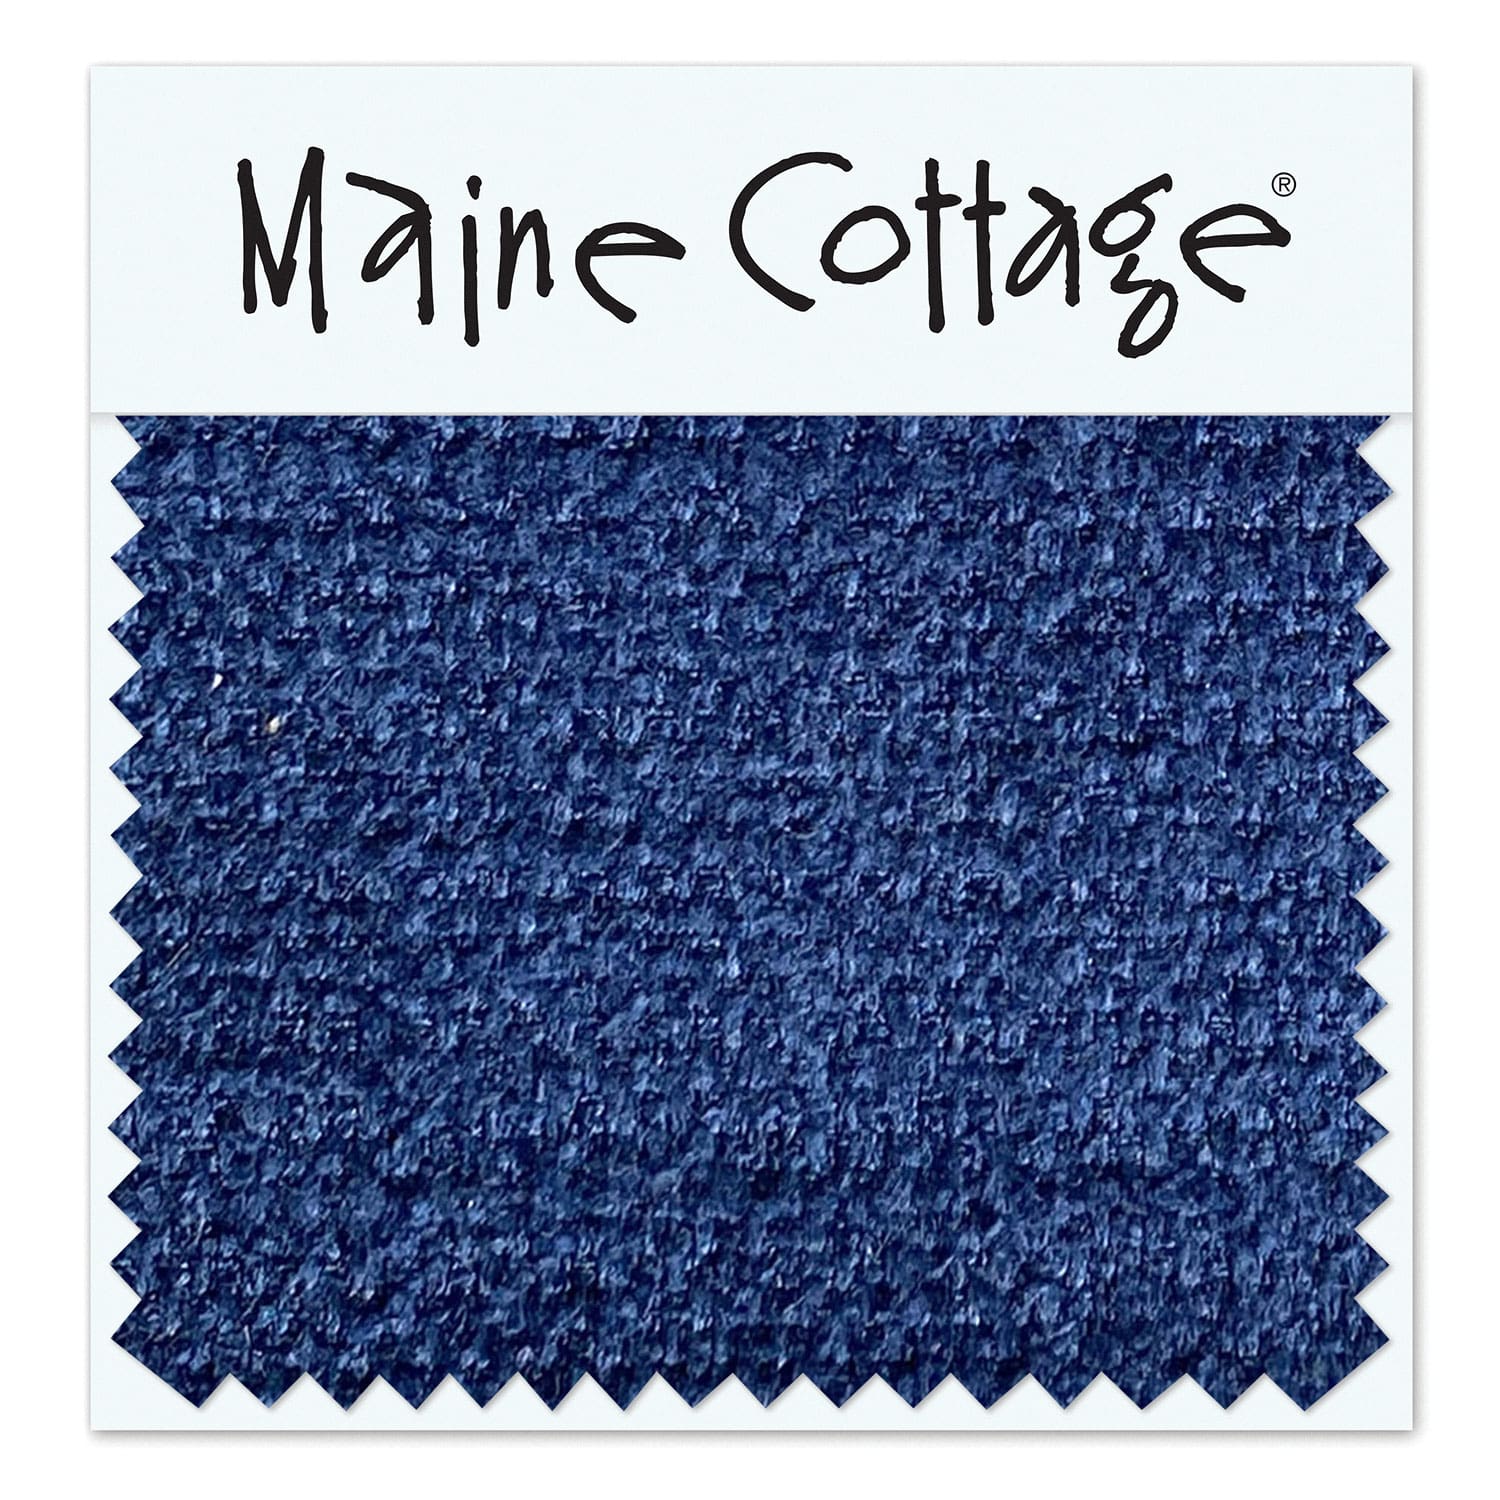 Maine Cottage Simply Soft: Marine Fabric Sample | Maine Cottage® 